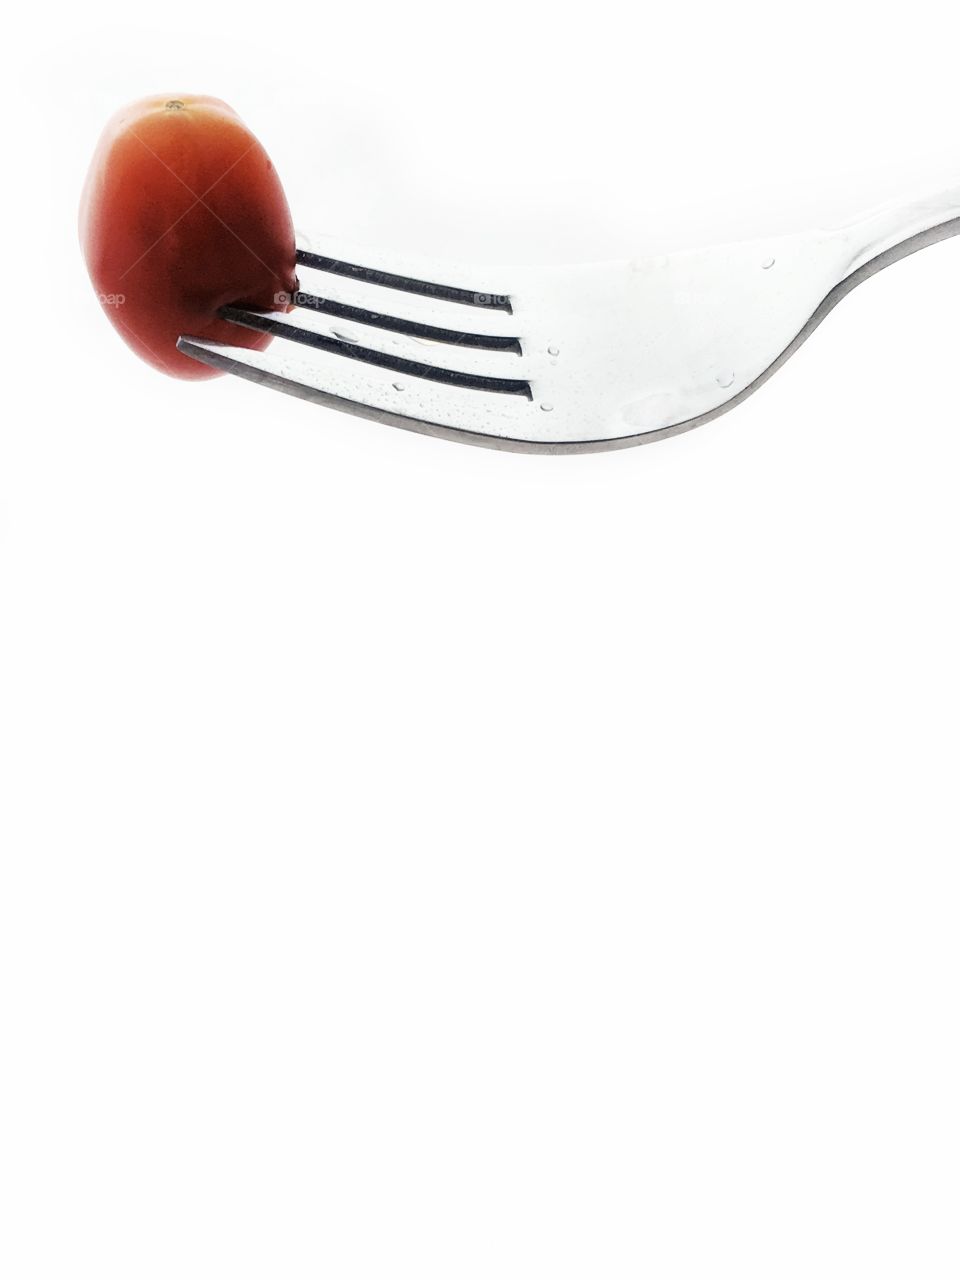 Plum tomato on metal fork